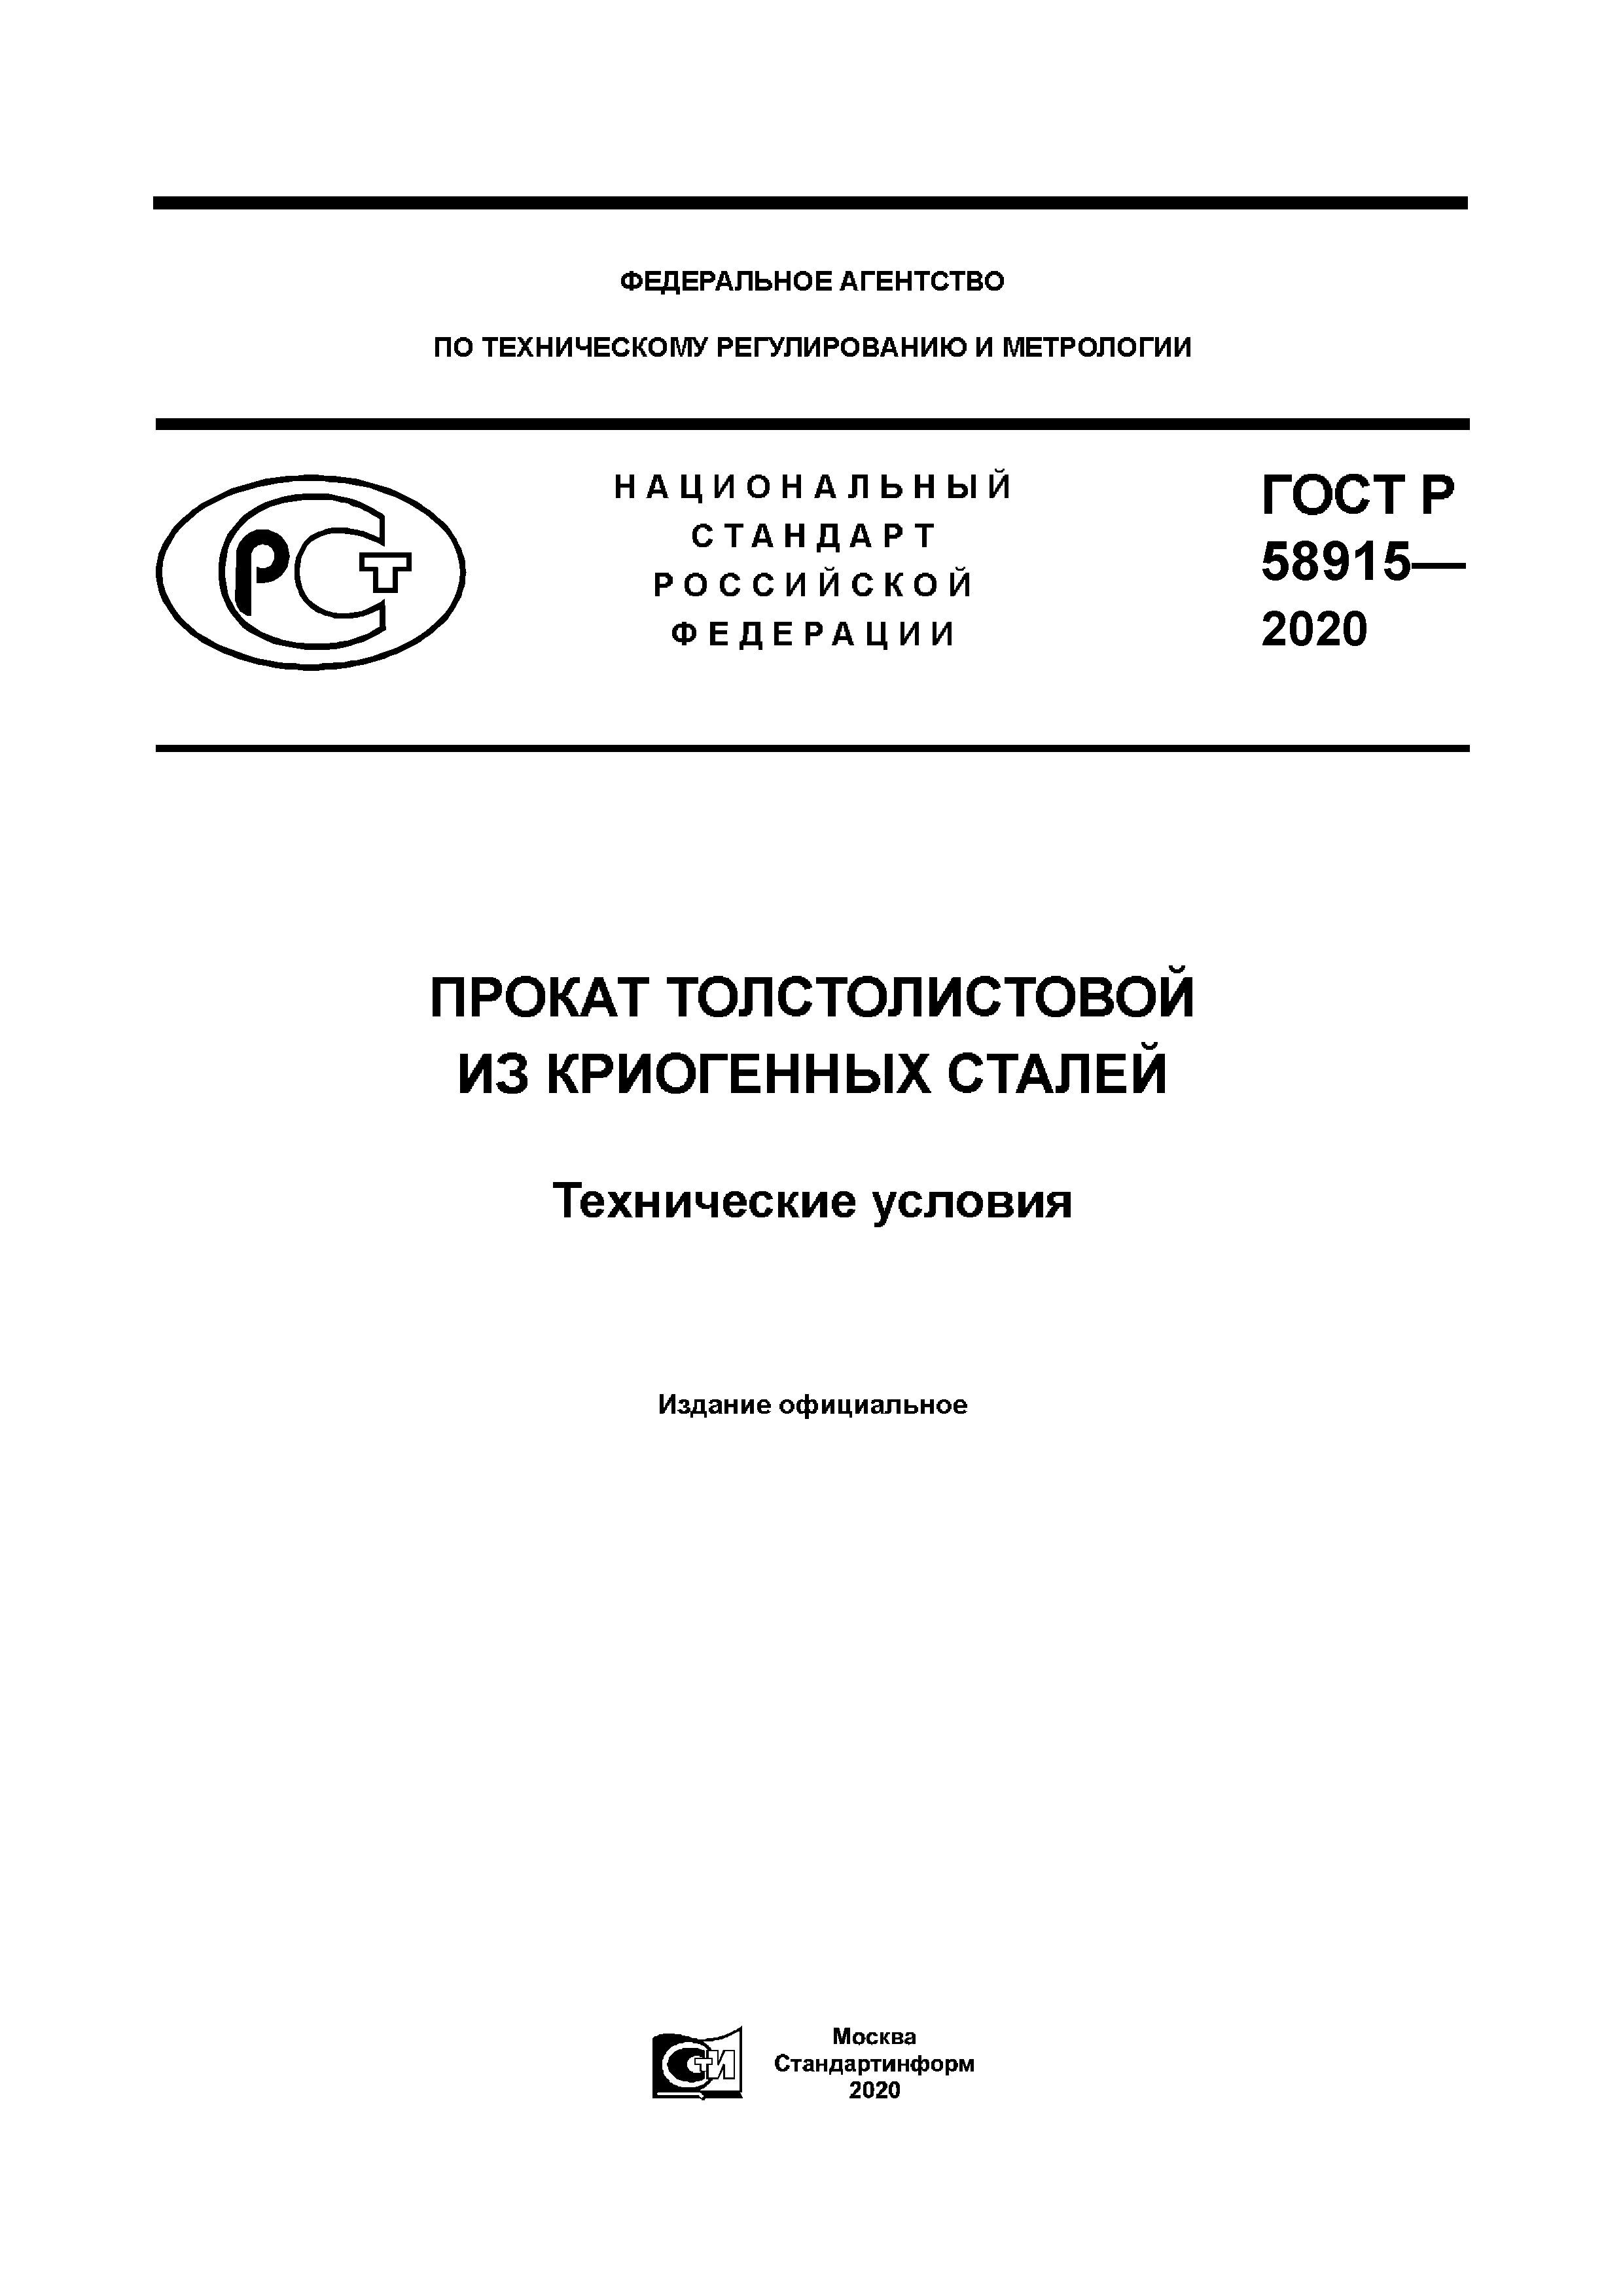 ГОСТ Р 58915-2020